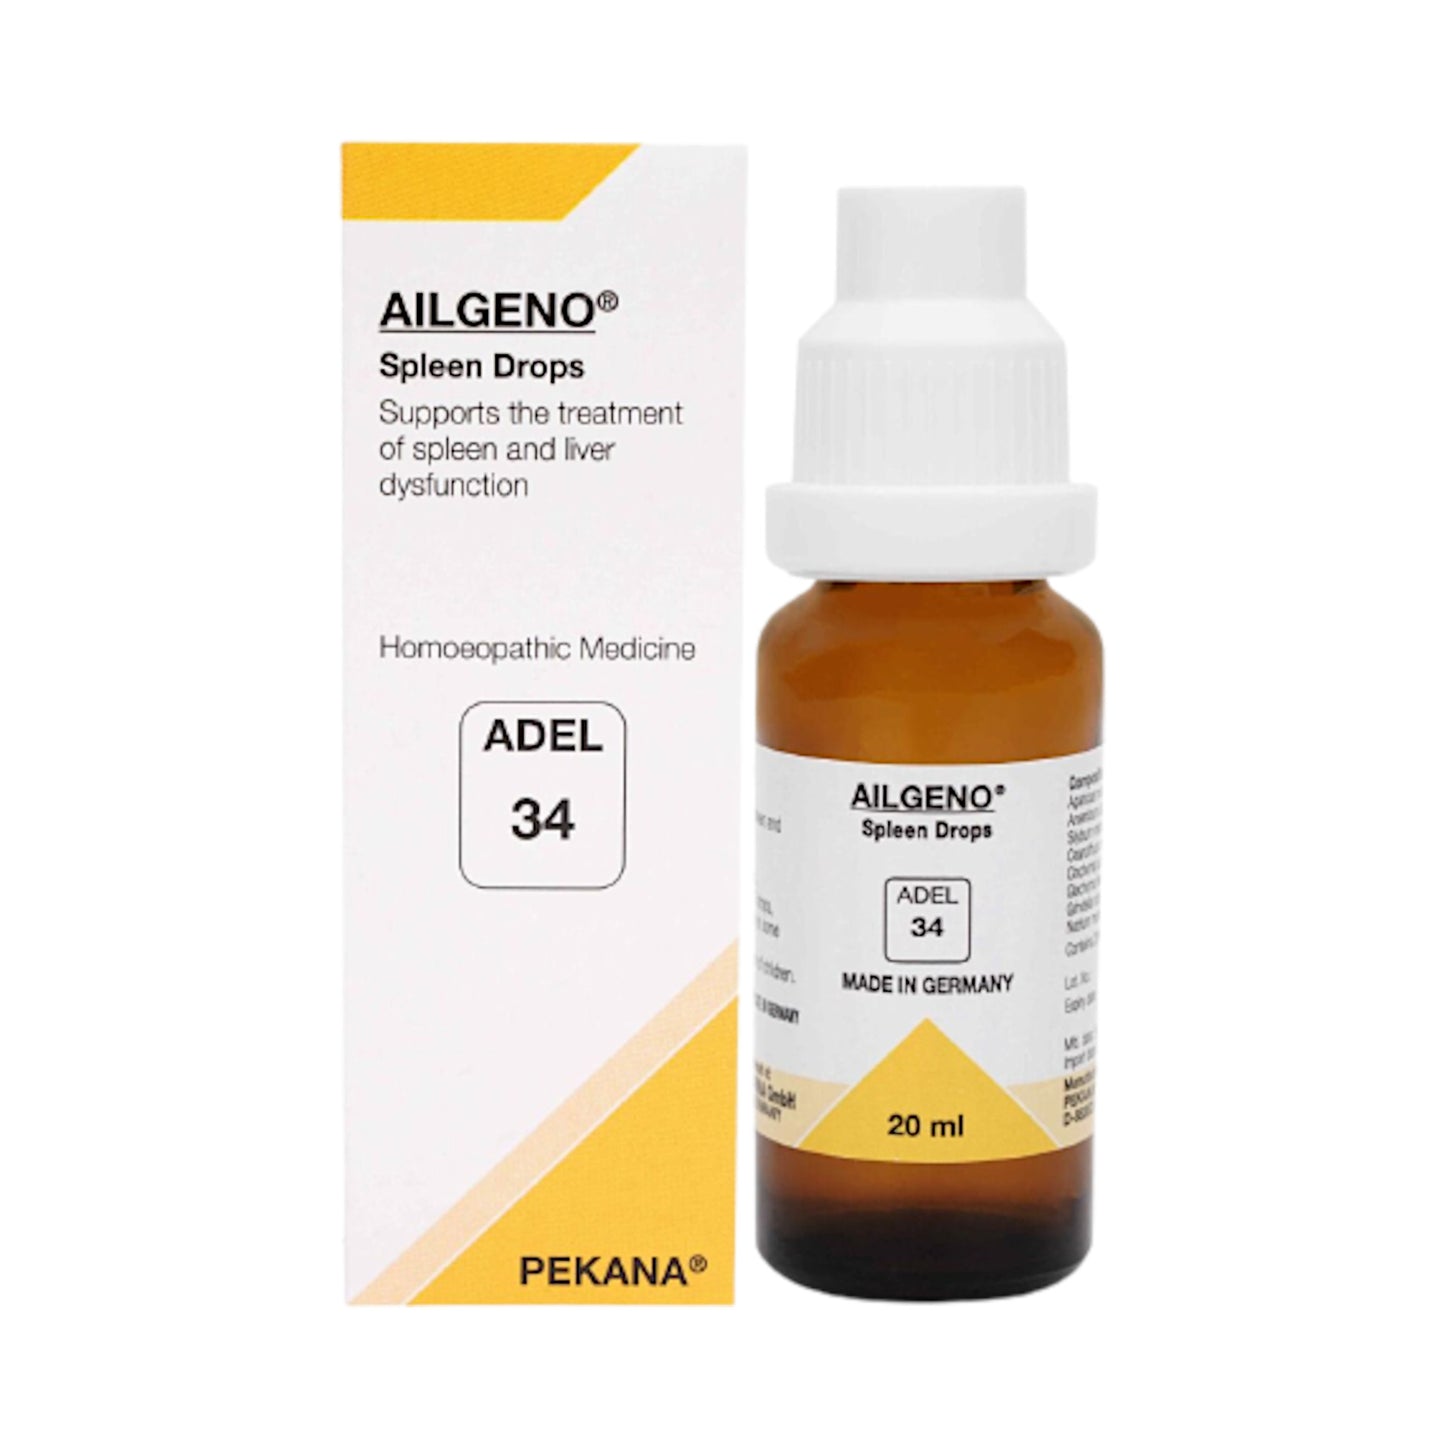 ADEL Germany Homeopathy - ADEL34 Ailgeno Drops 20 ml